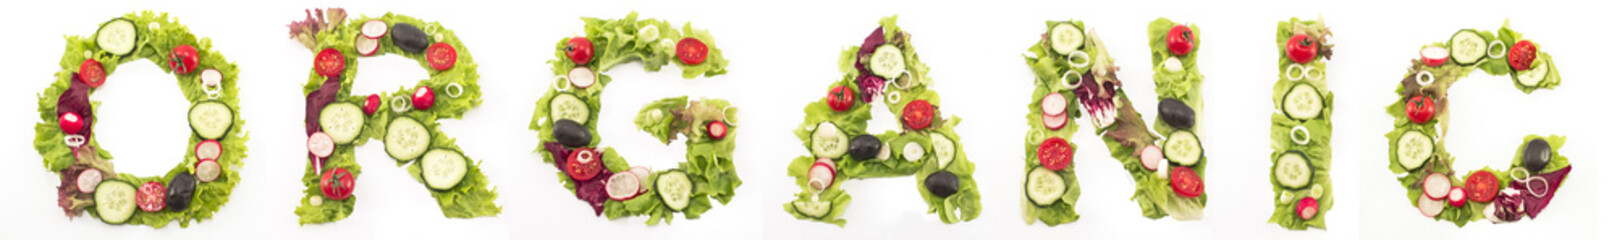 Word organic made of salad